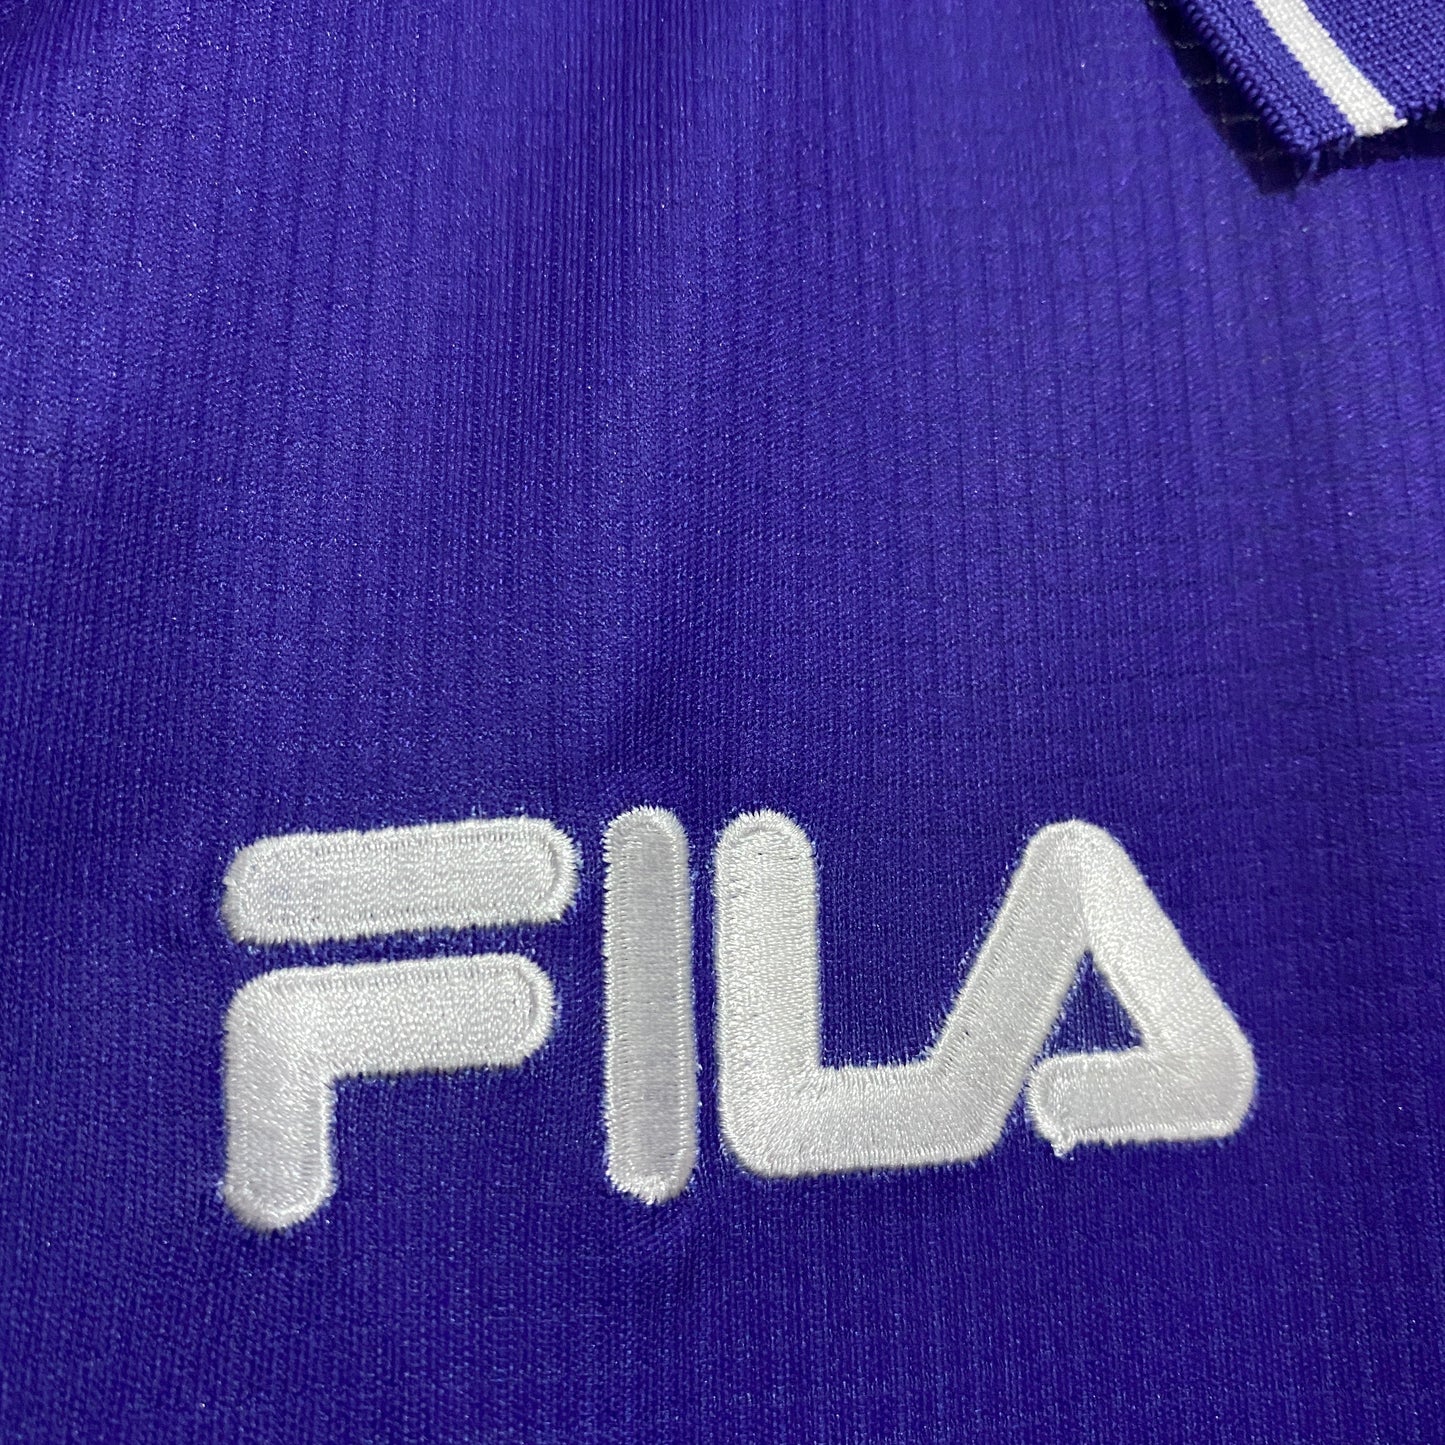 Retro Fiorentina Kit Home 1998/99 Kit